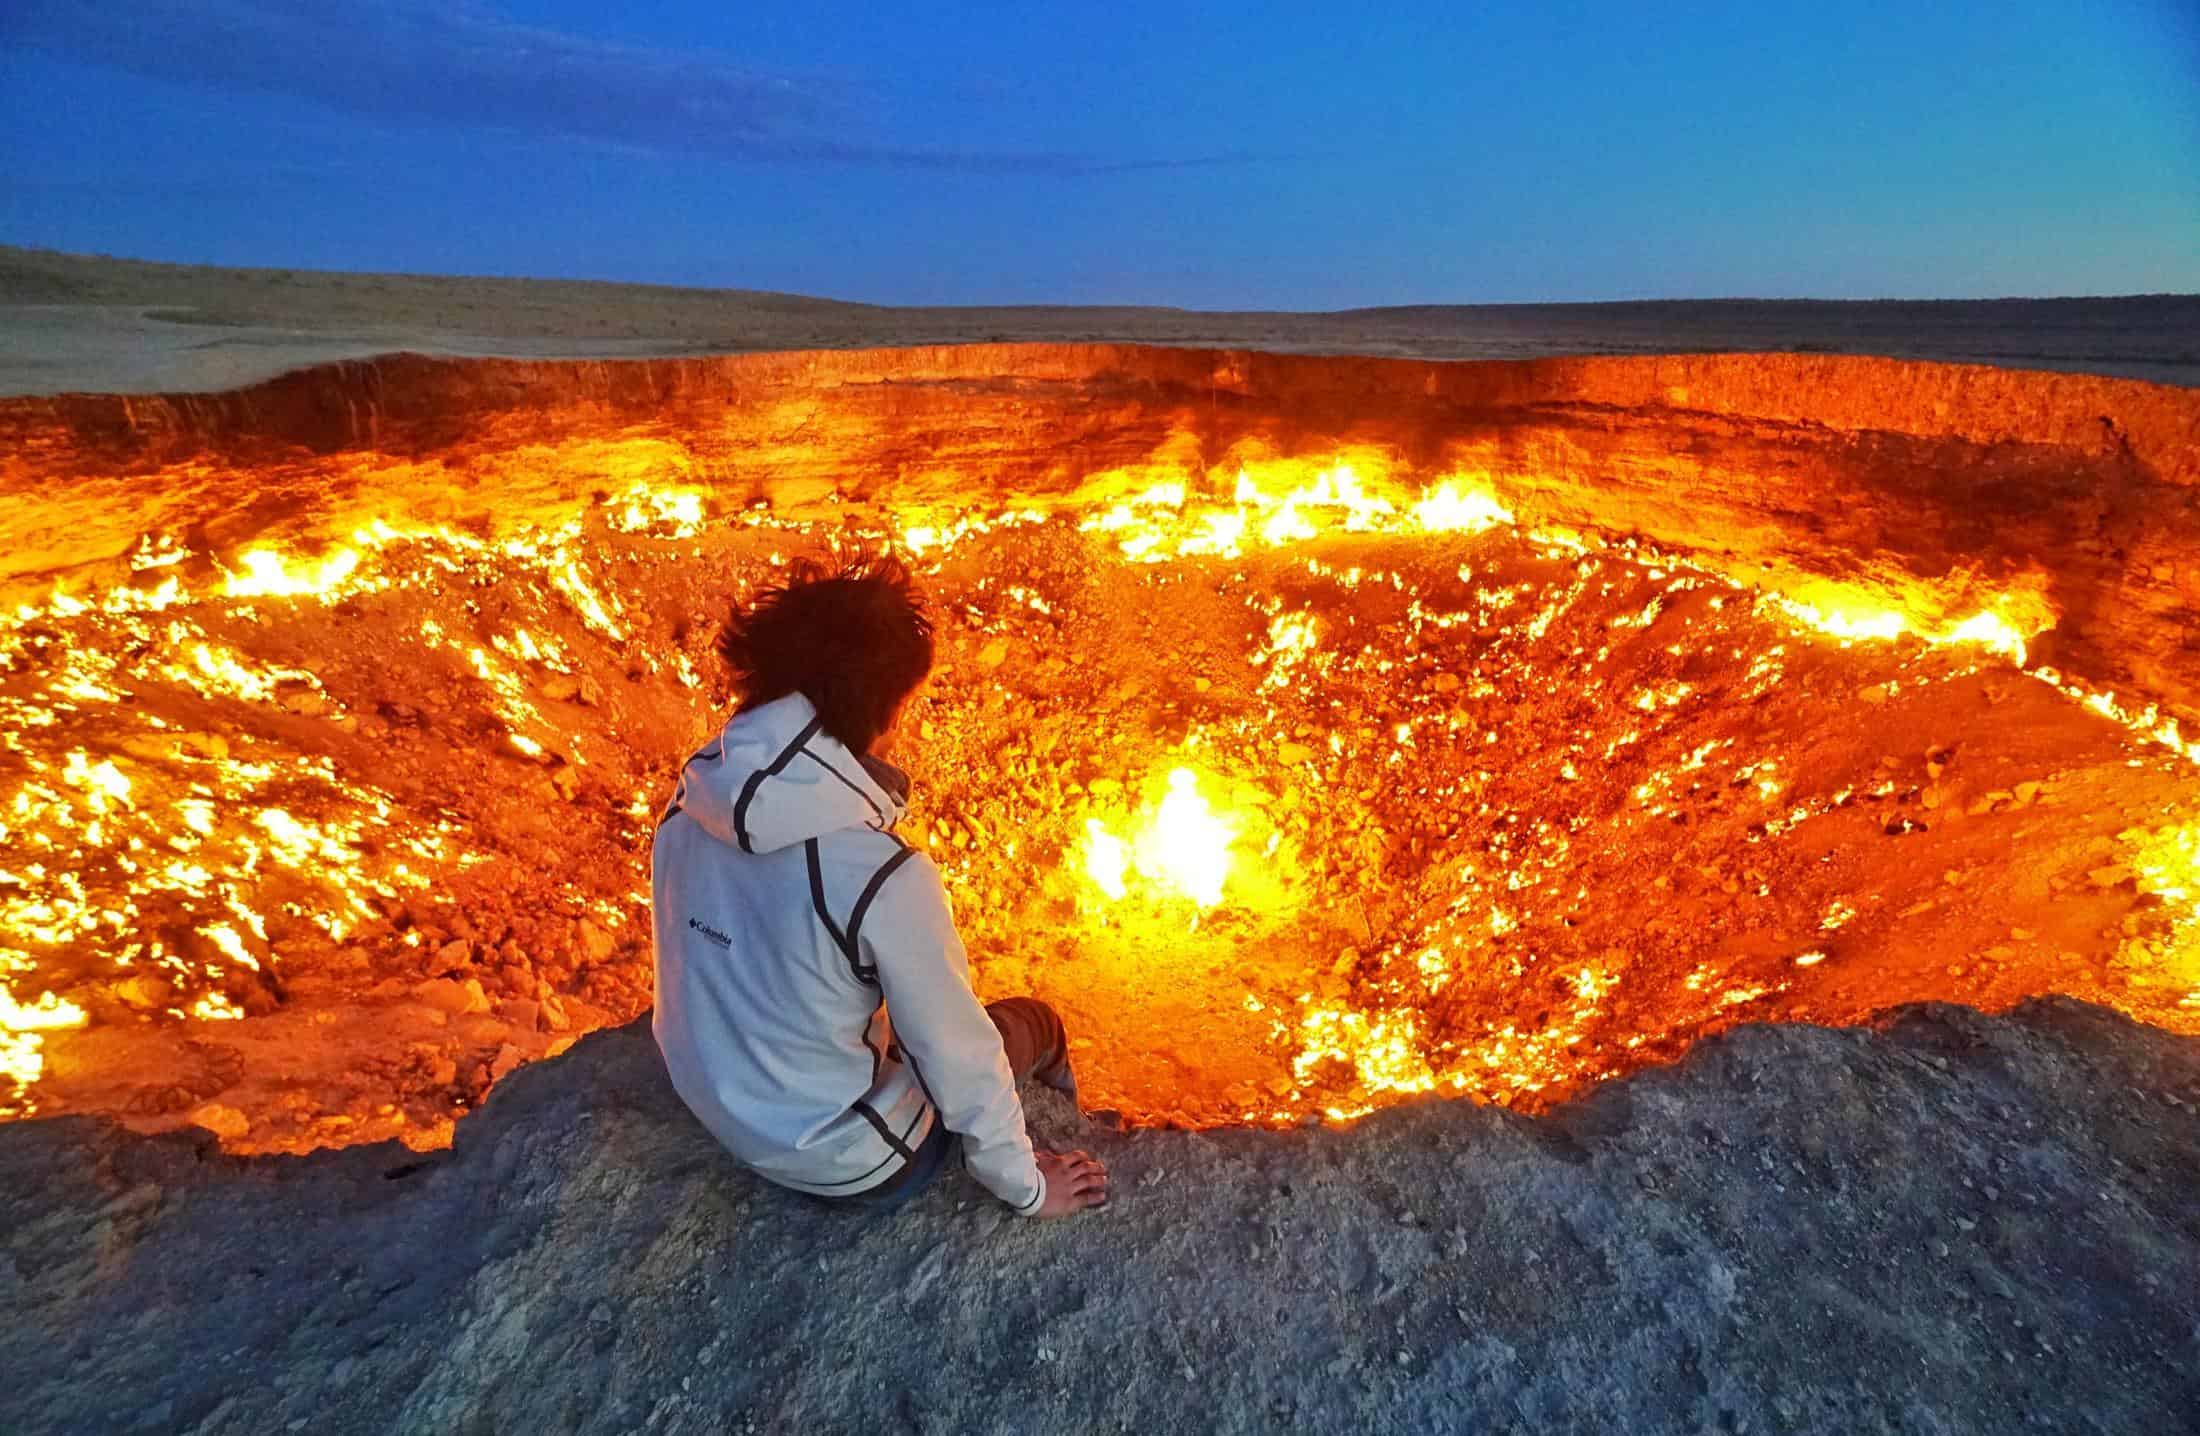 Земля пал. "Врата ада" (Дарваза), Туркменистан. Газовый кратер врата ада Туркменистан. Дарваза́ — газовый кратер в Туркмении. "Врата в ад", Дарваза, Туркменистан.